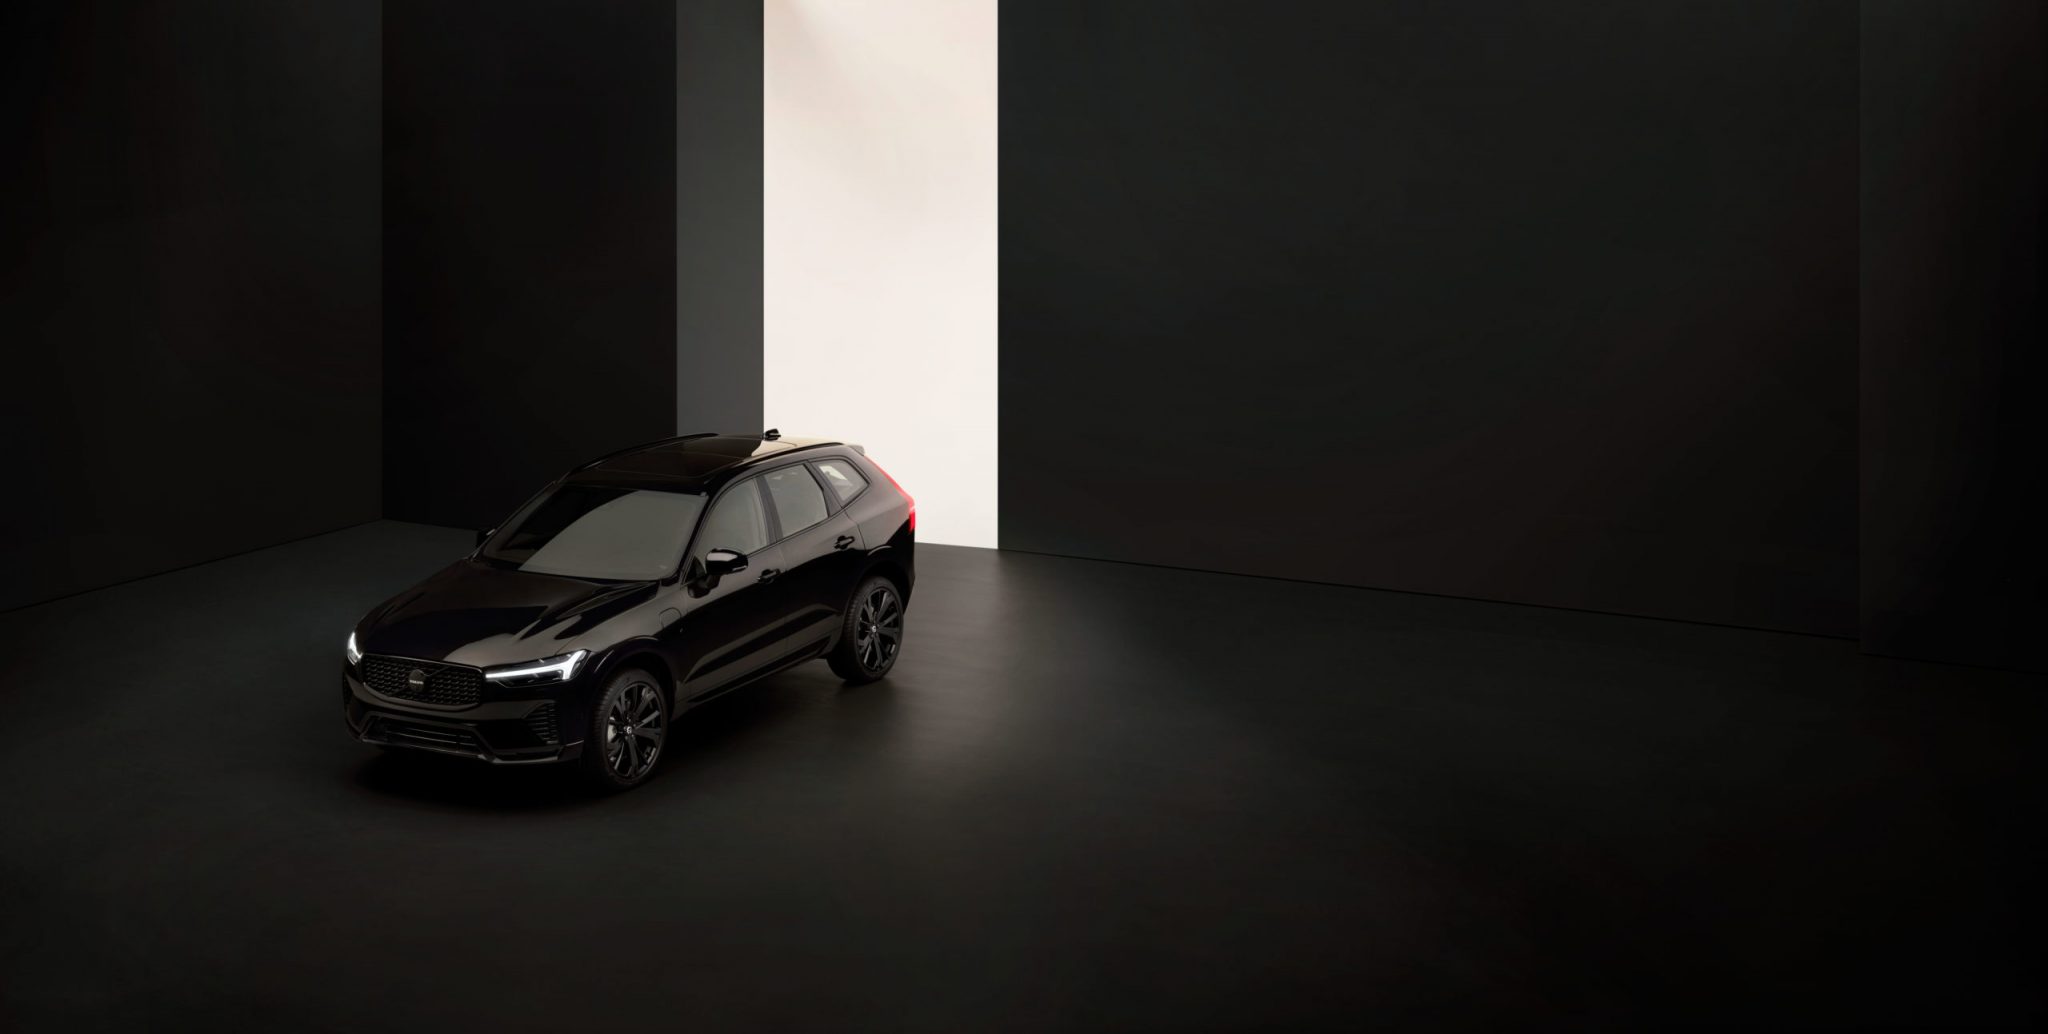 Svart Volvo XC60 i mørkt rom